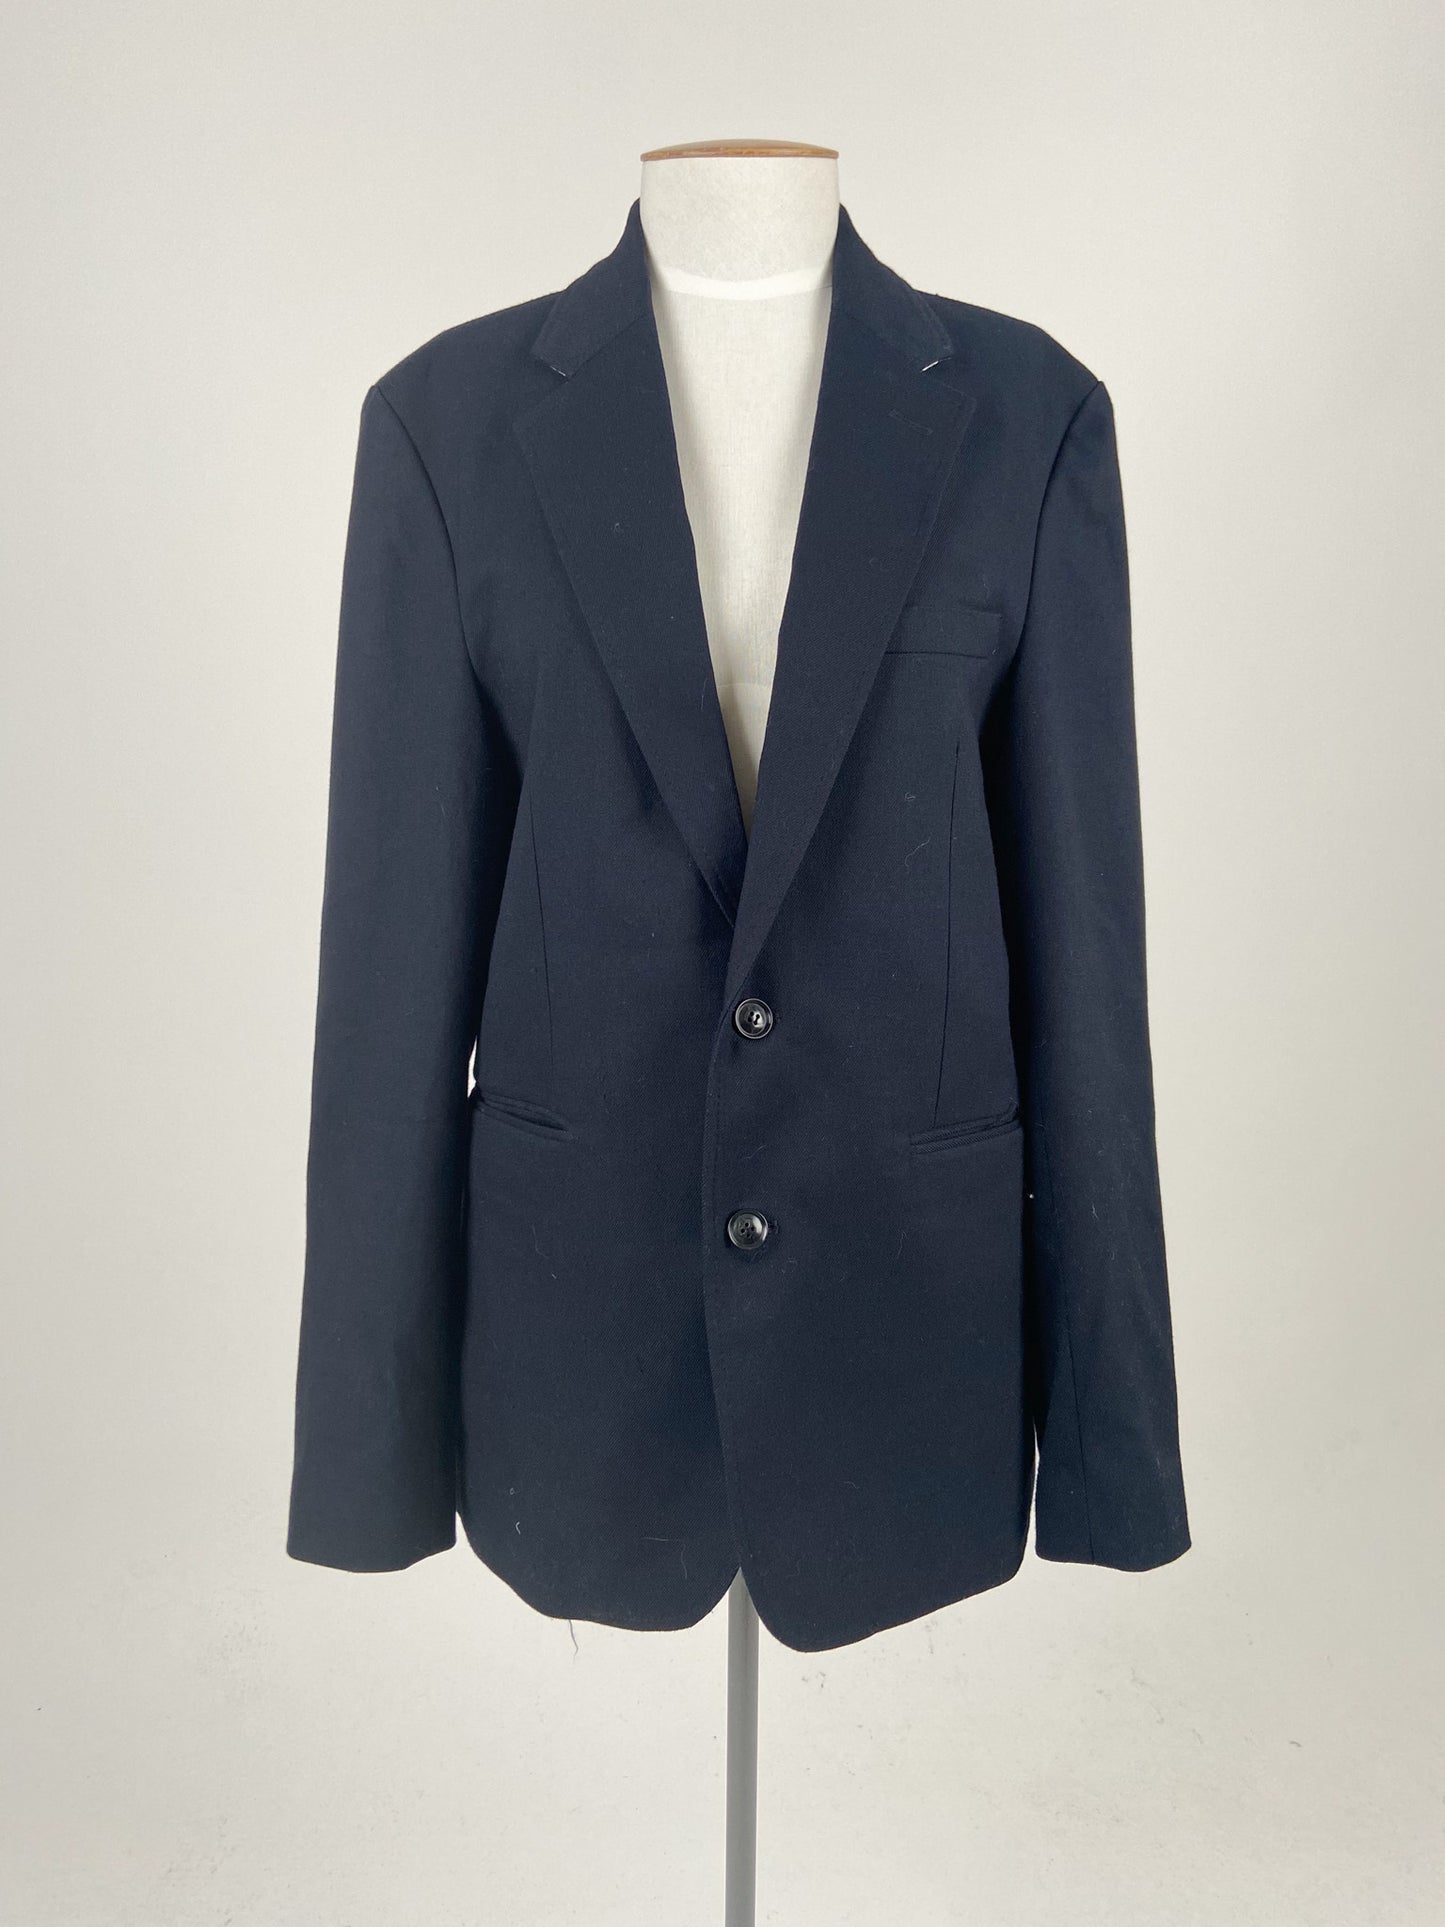 Unknown Brand | Navy Formal/Workwear Jacket | Size M